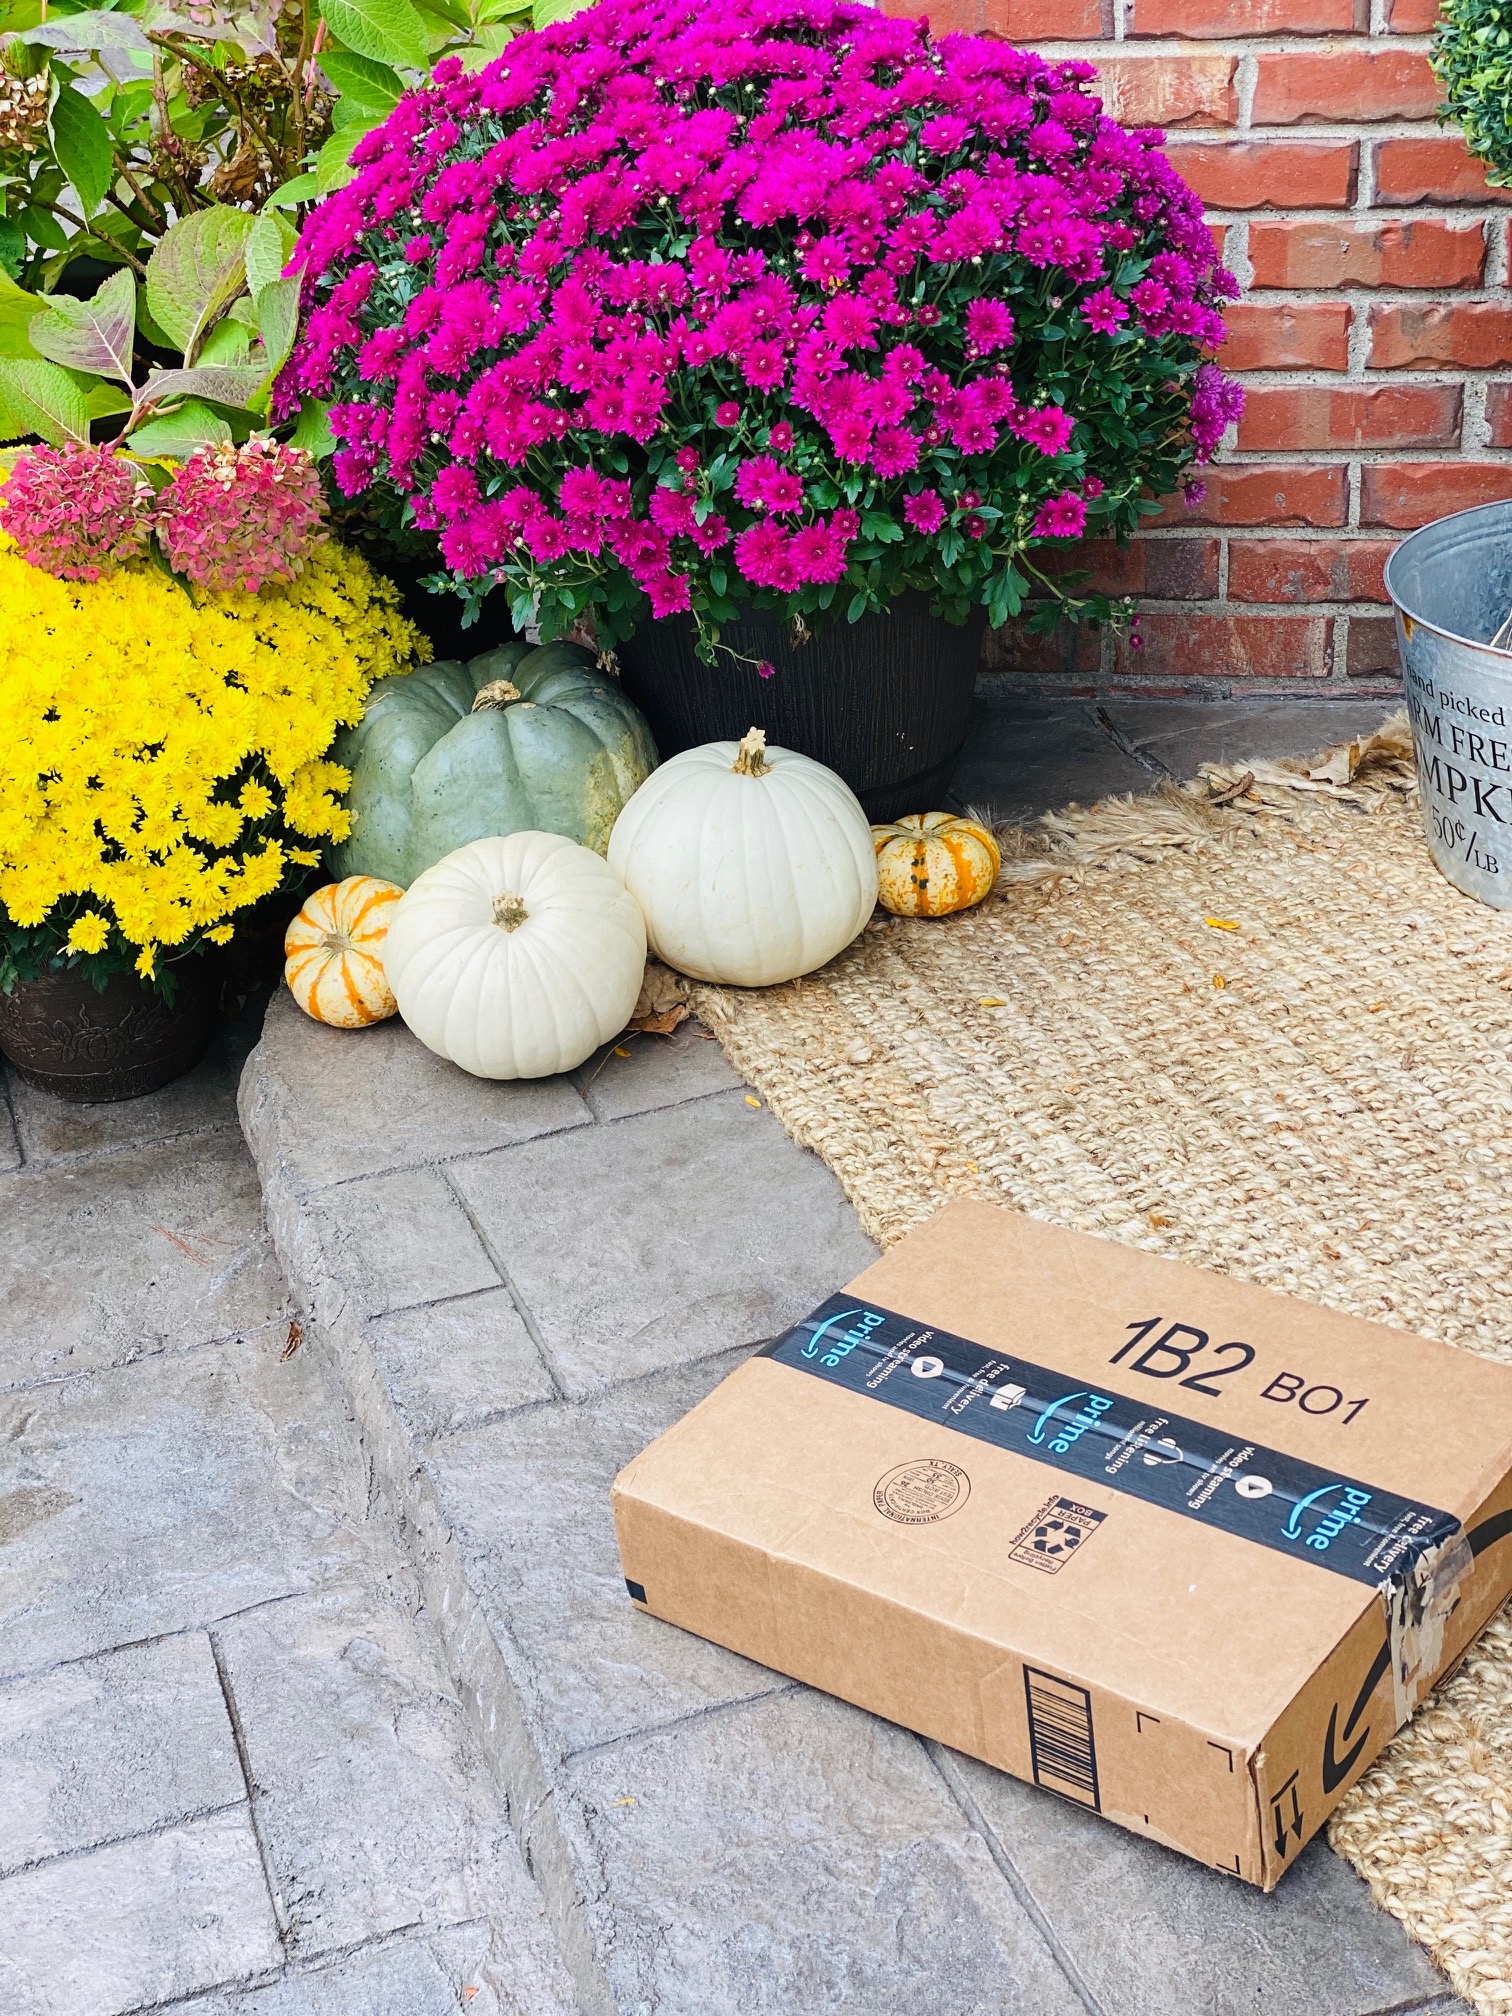 Amazon Prime Box on Porch